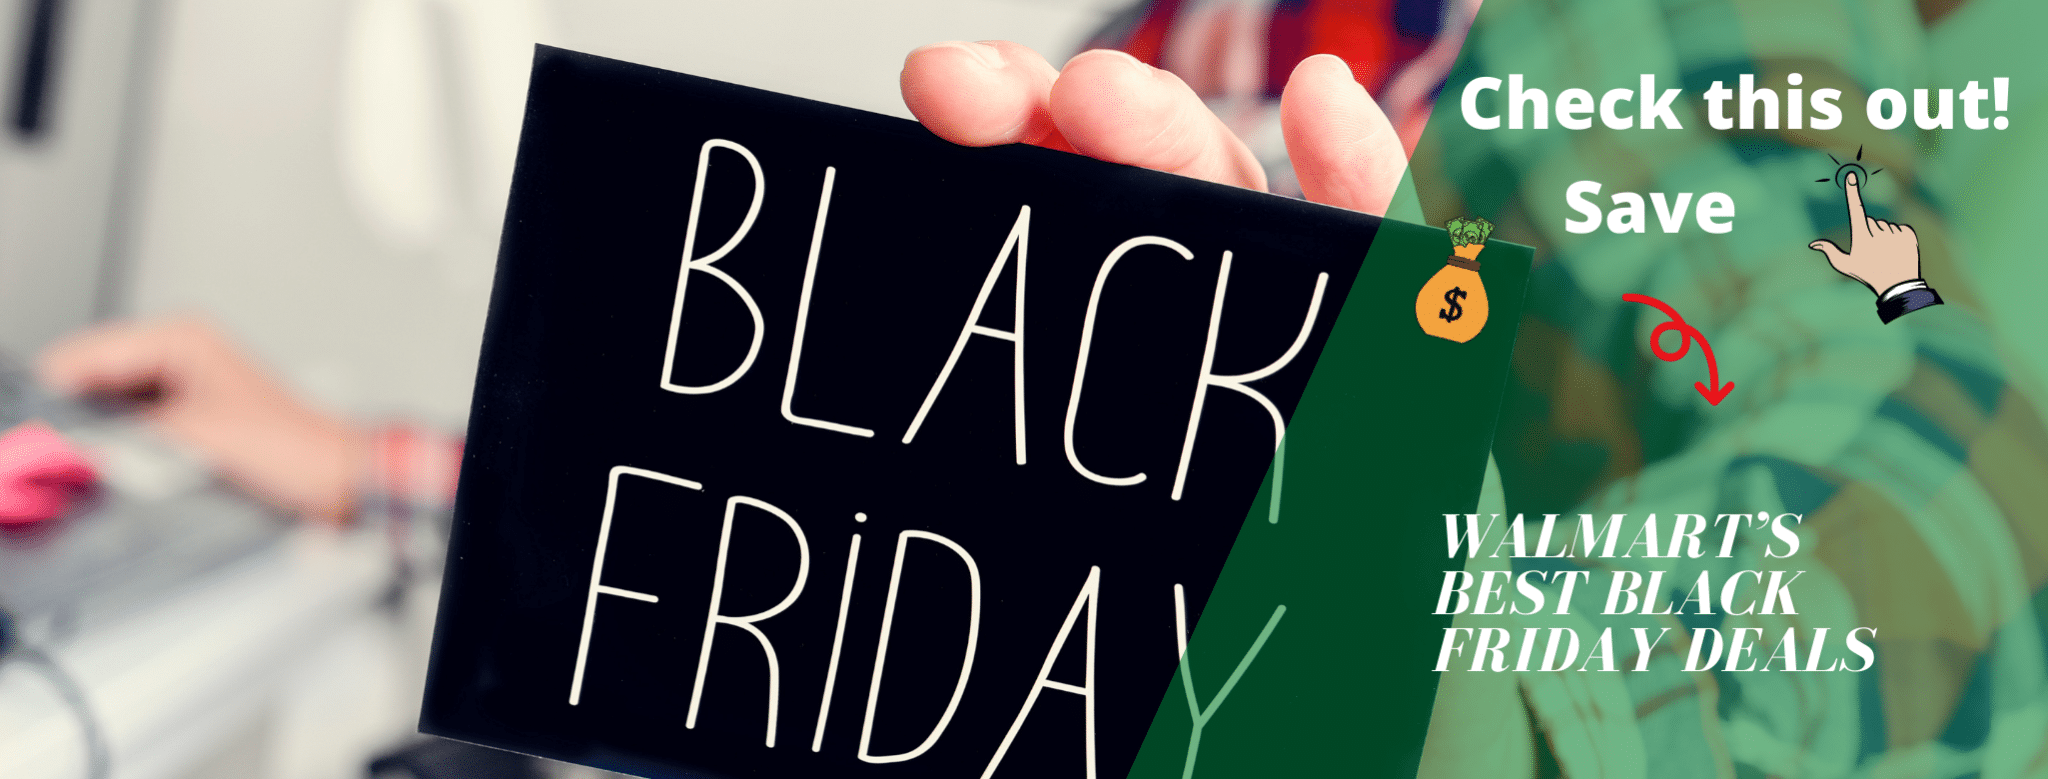 Walmart’s Best Black Friday Deals